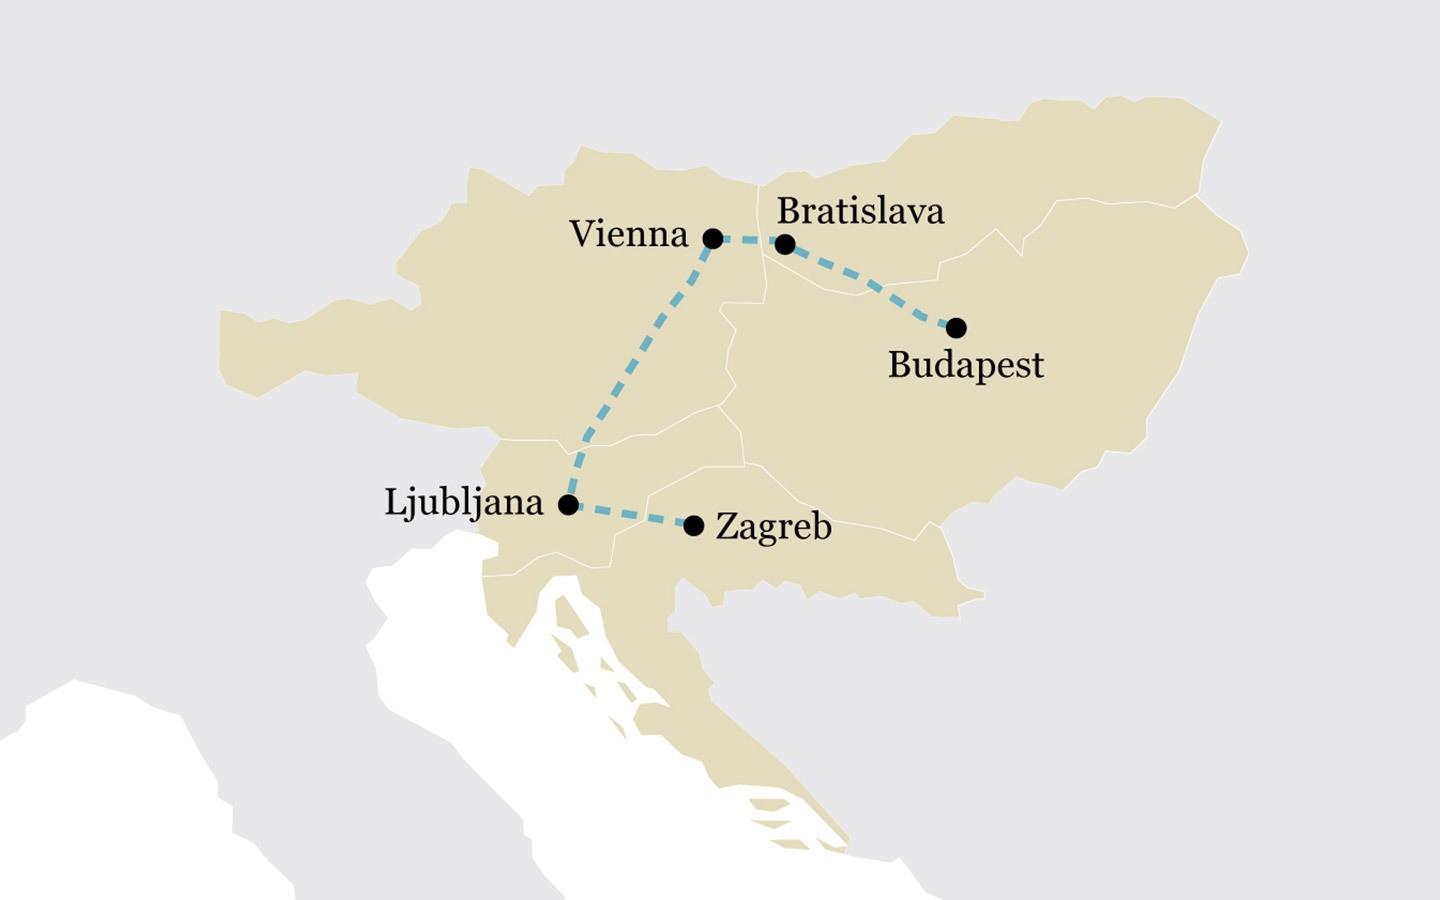 train tours of eastern europe